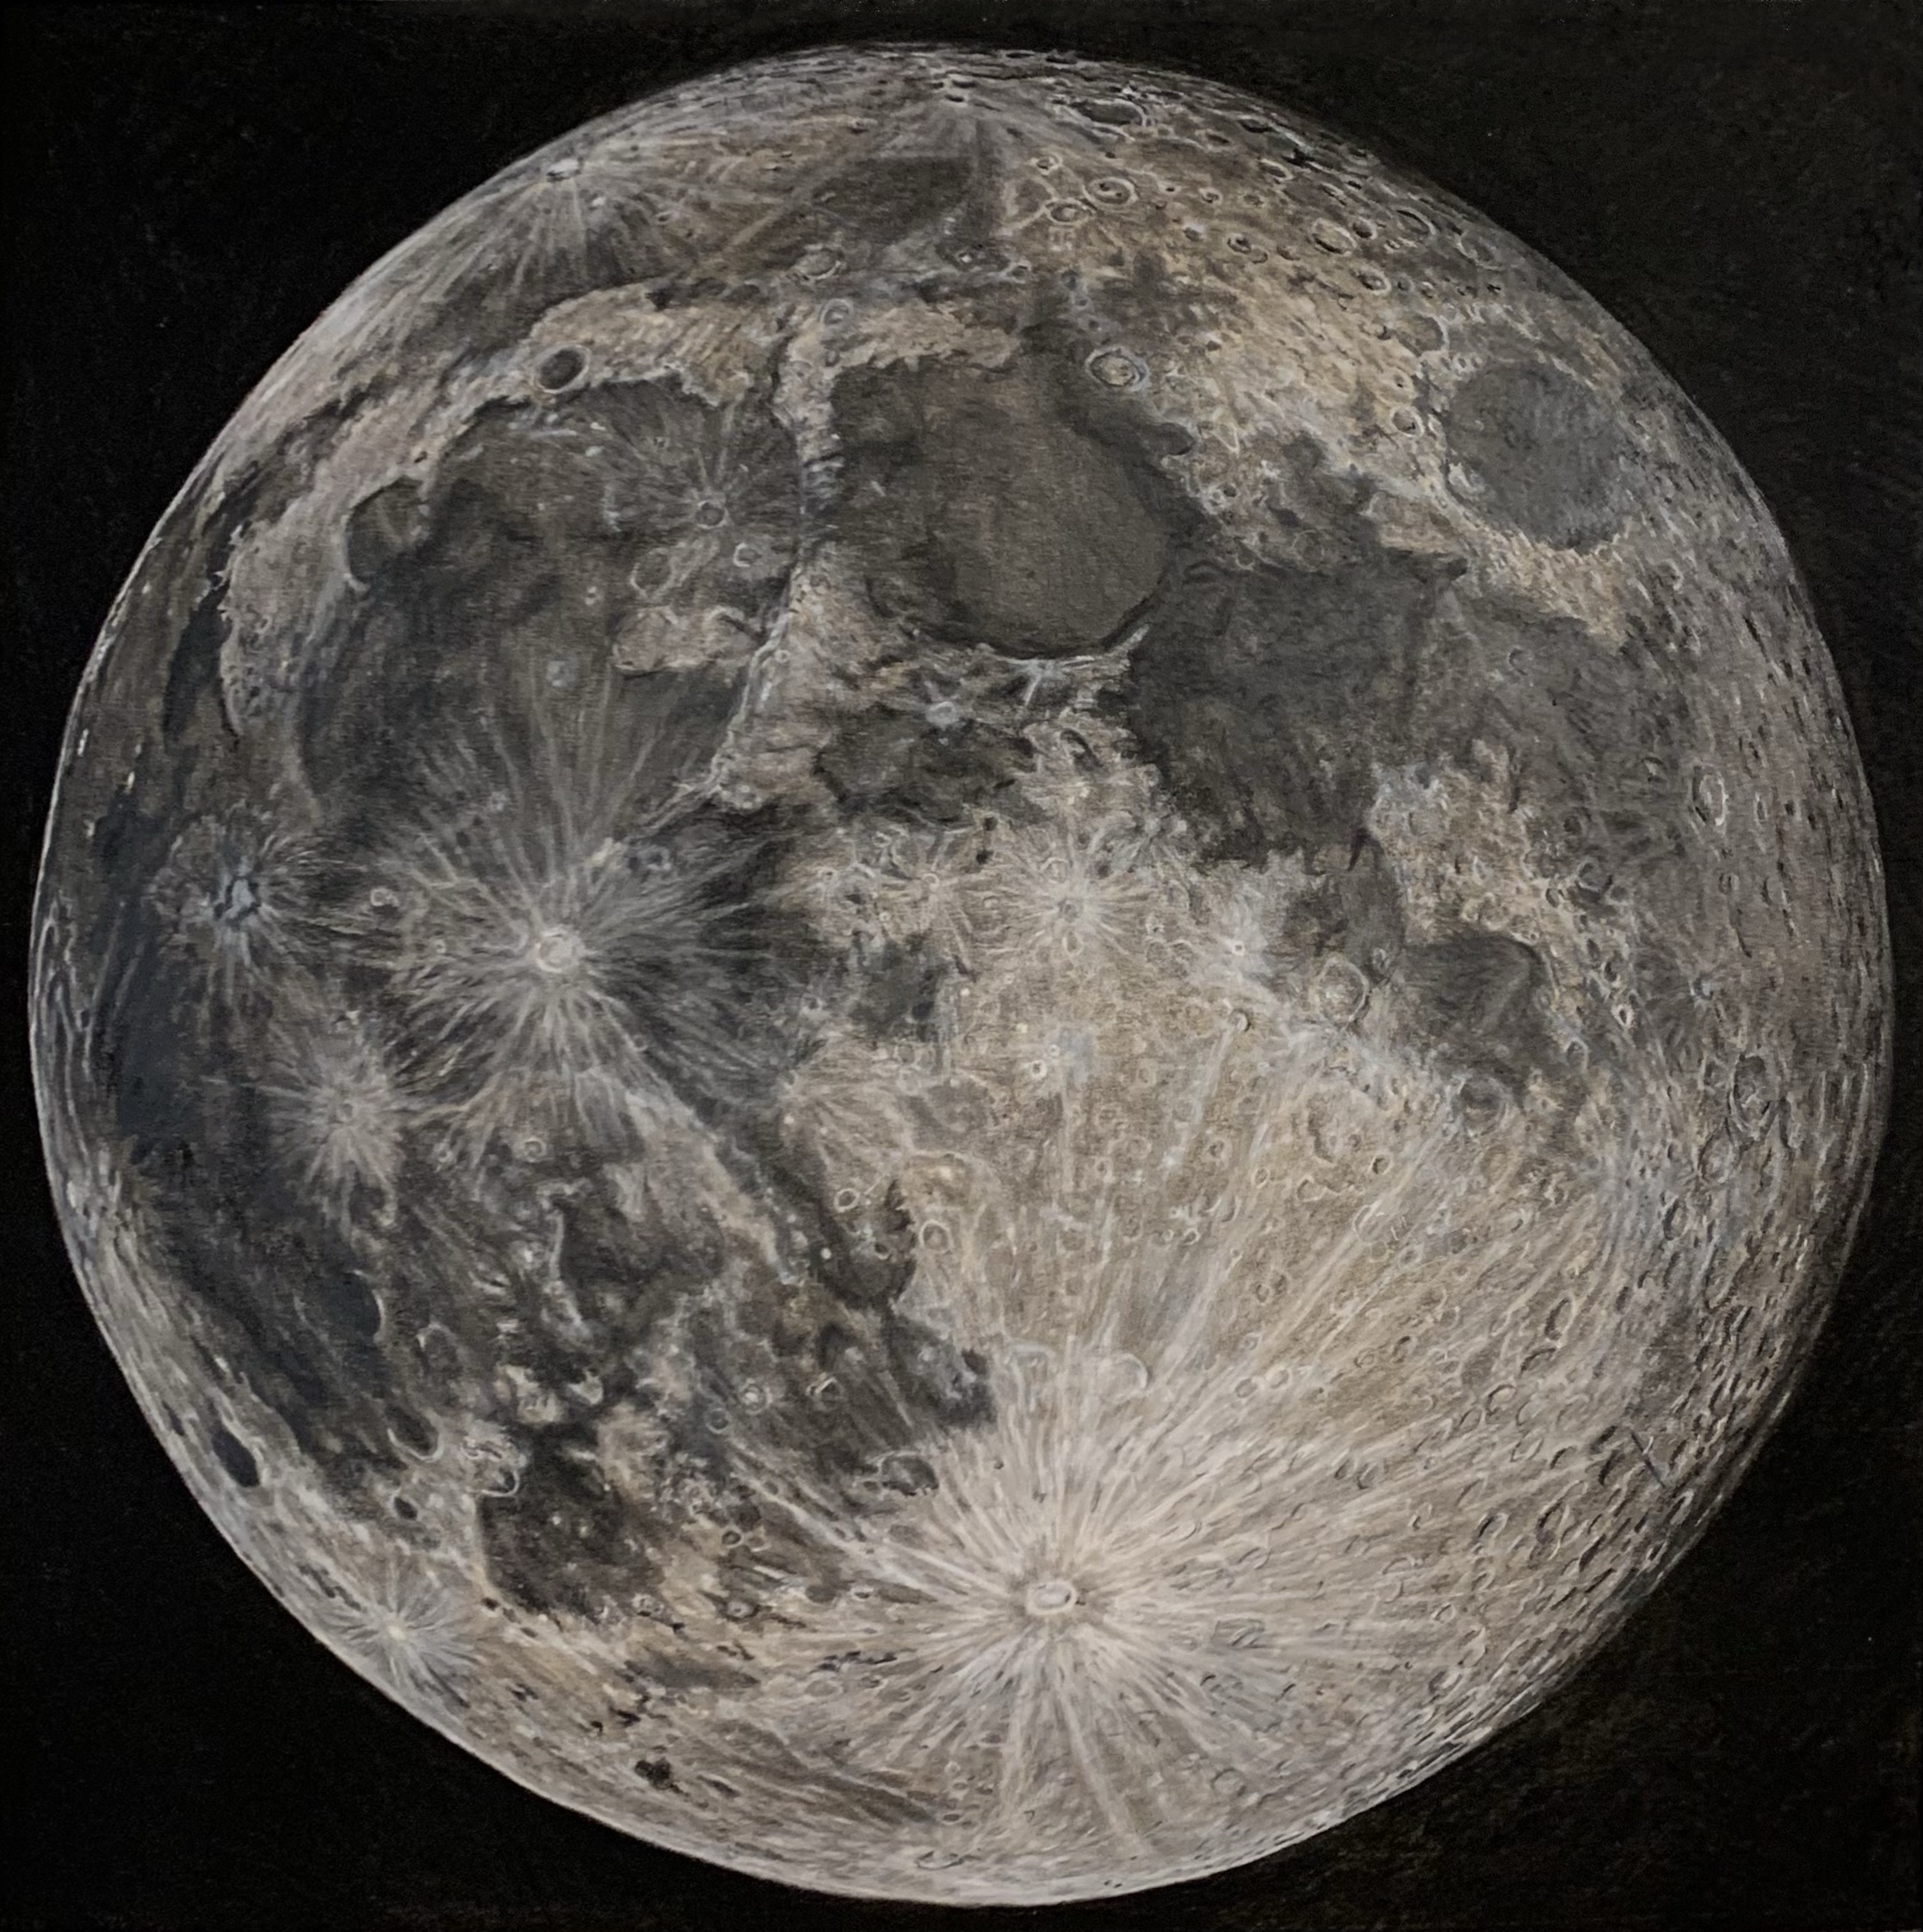 Full Moon drawing | The Planetary Society